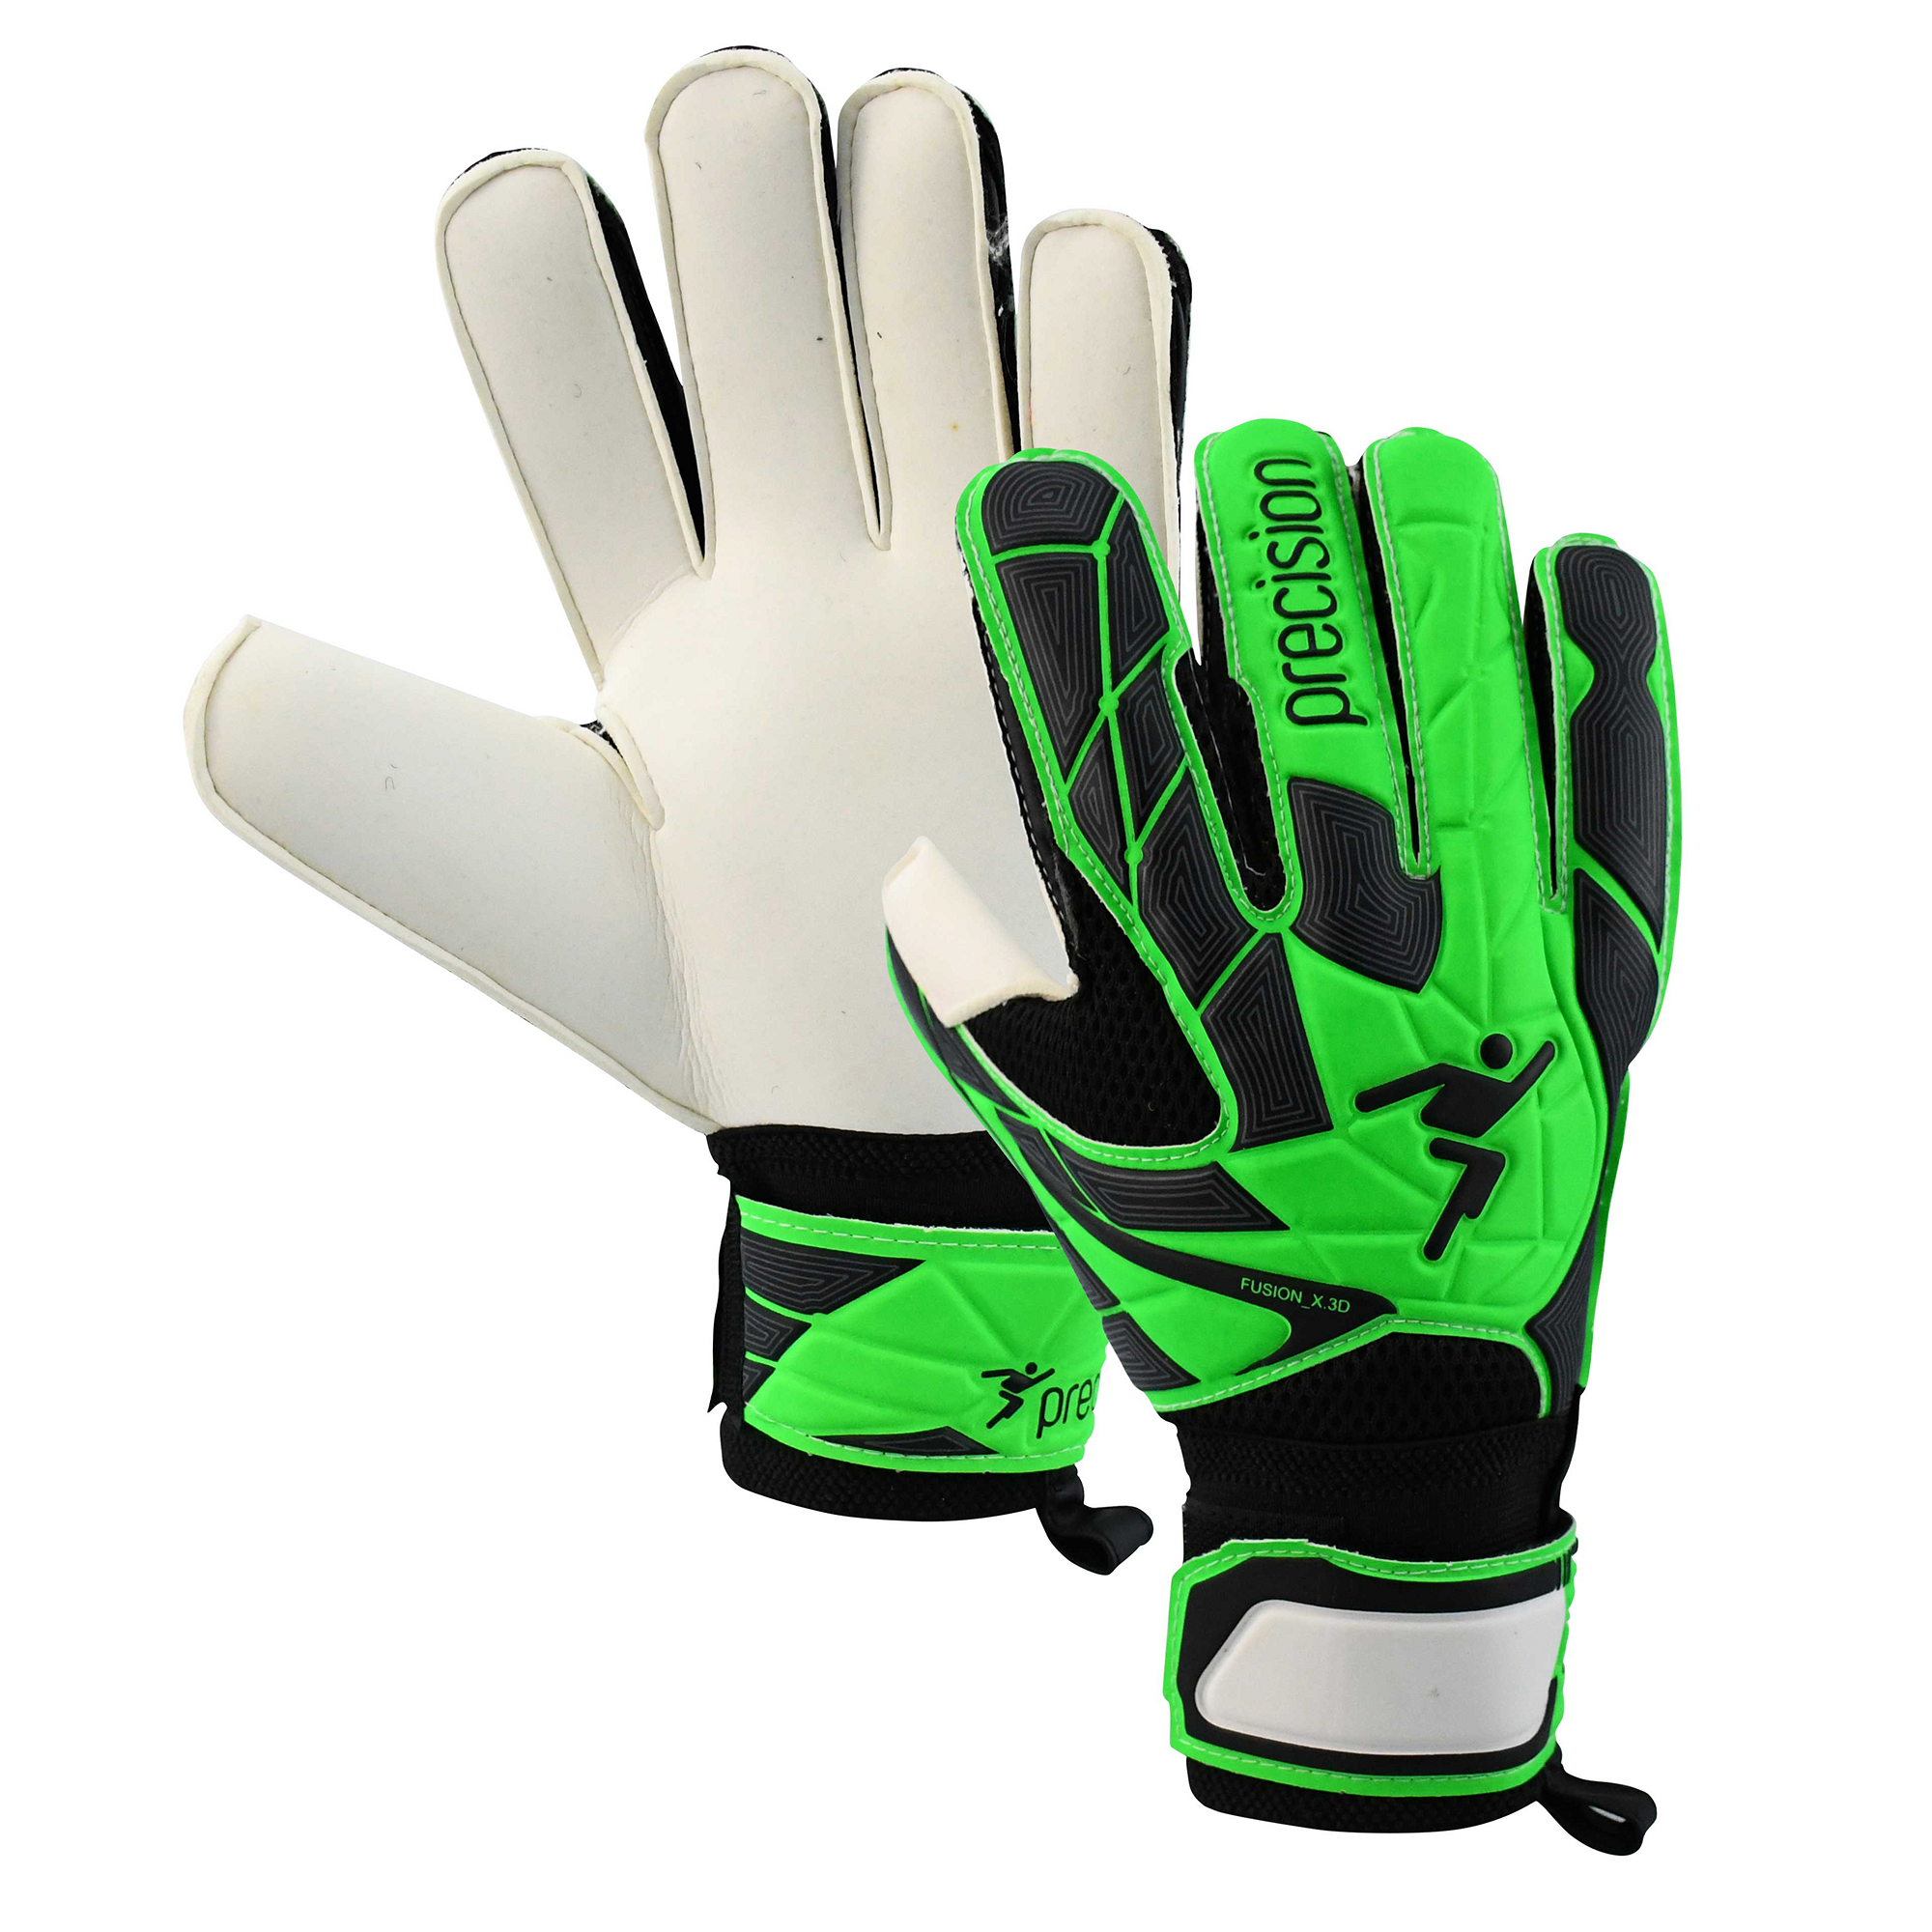 Goalkeeper gloves size 8 